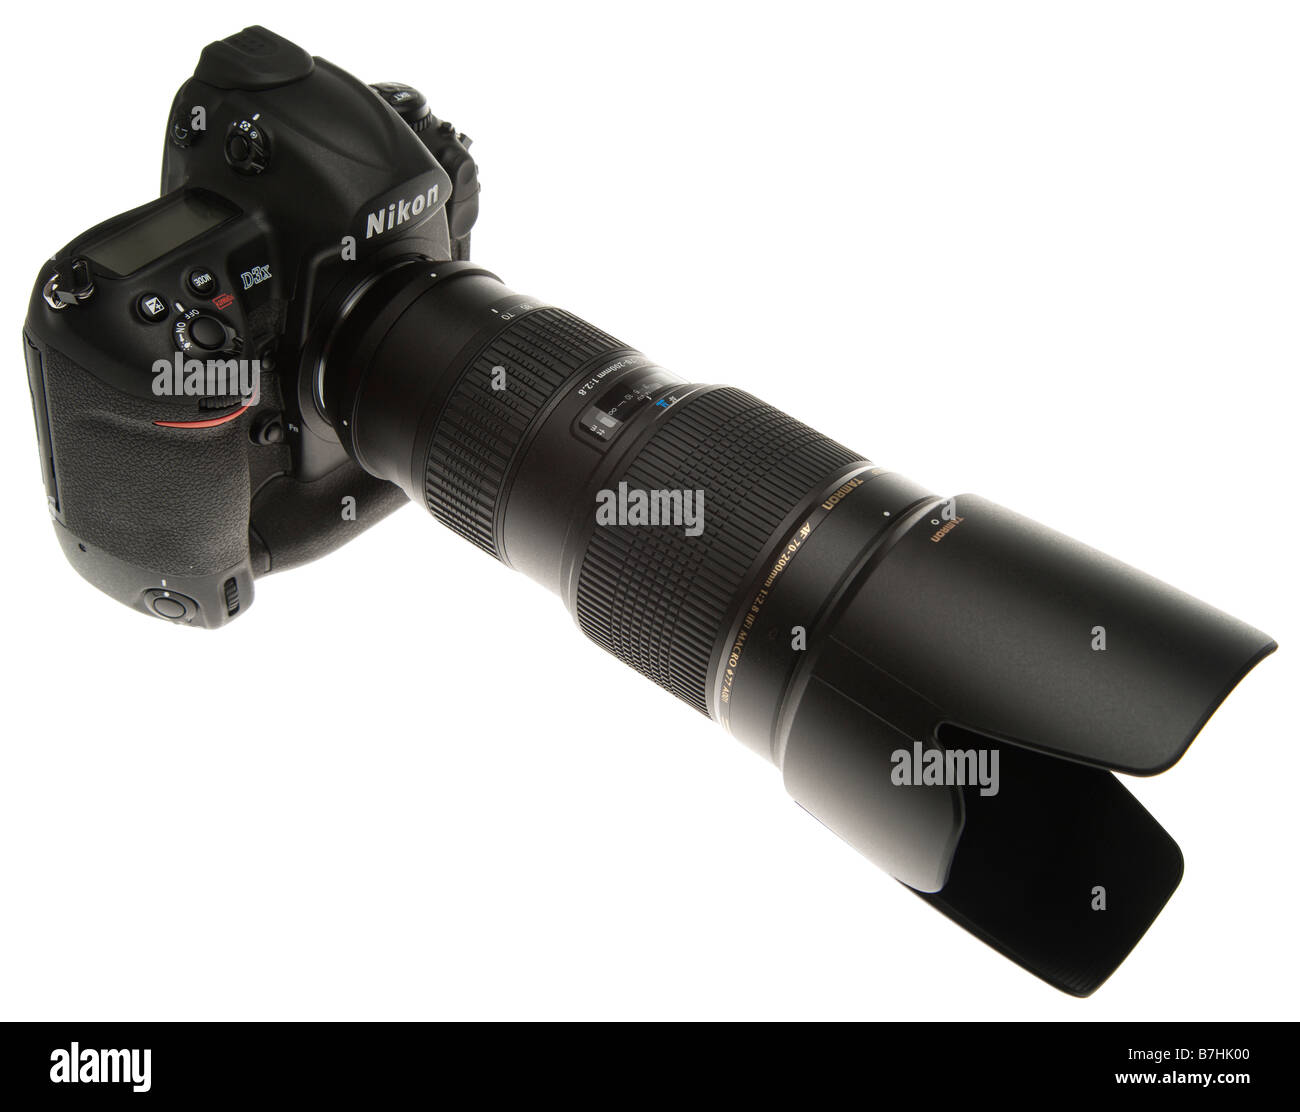 Nikon D3X camera with Tamron 70-200mm f/2.8 zoom lens Stock Photo